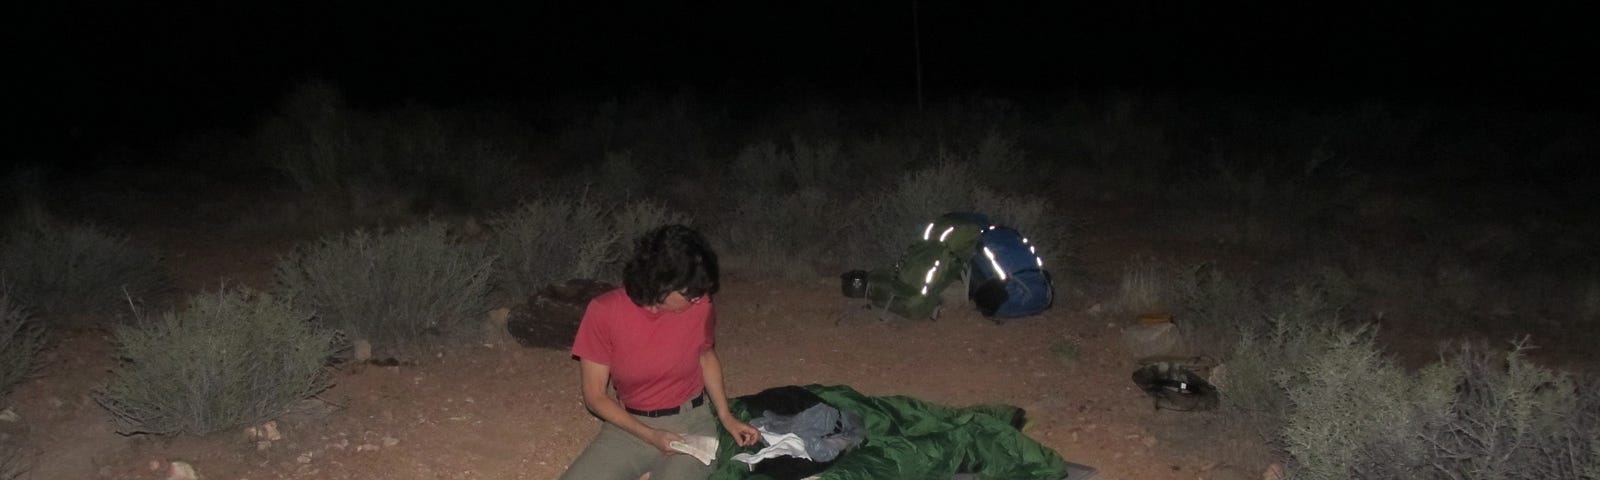 Woman kneeling on a sleeping pad on the ground in the dark night.